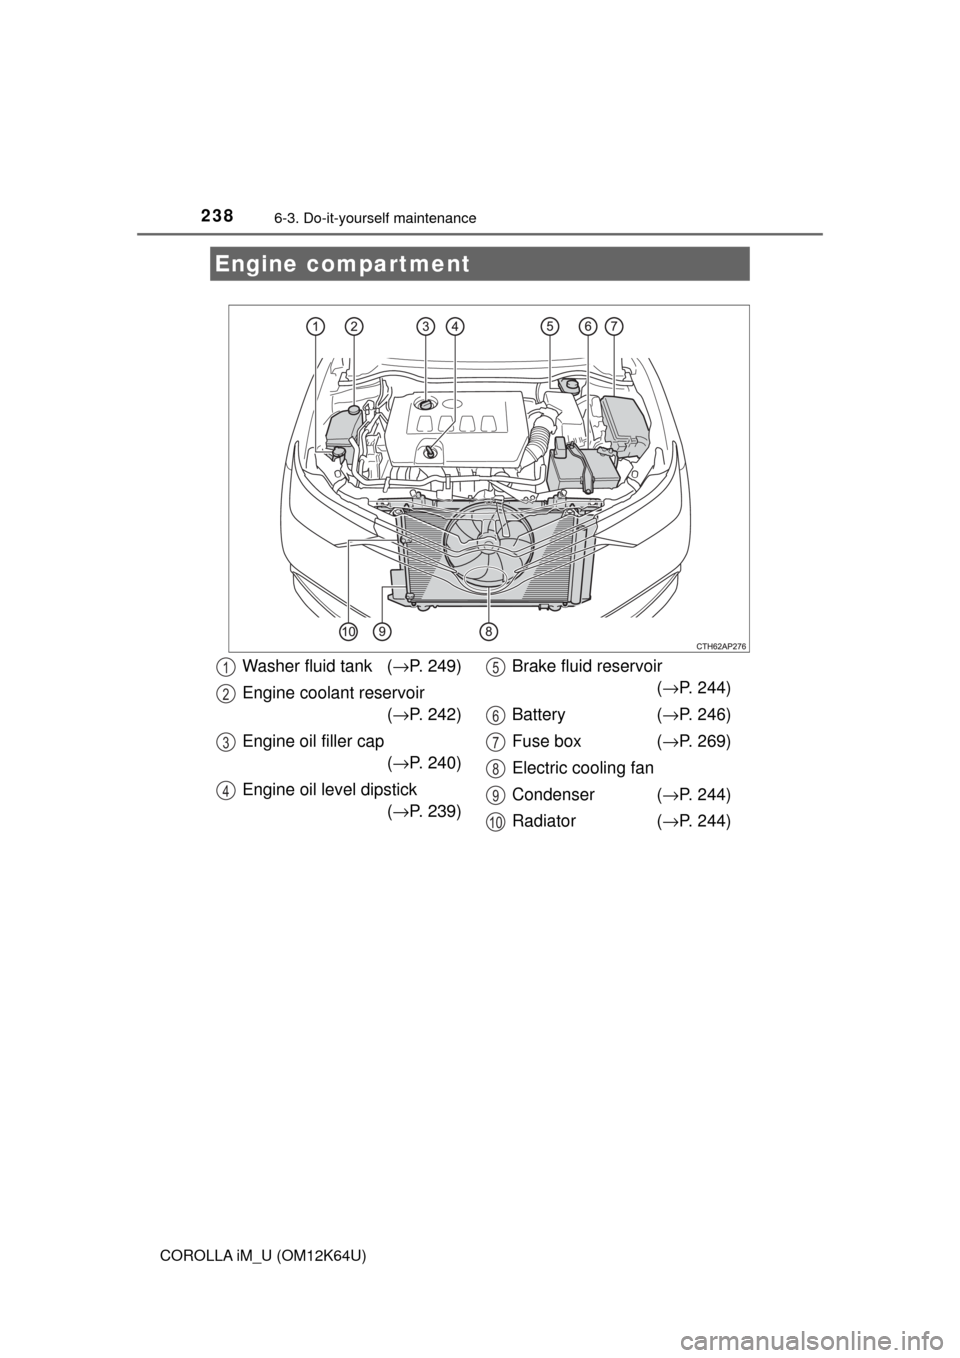 TOYOTA COROLLA iM 2017 11.G Owners Manual 2386-3. Do-it-yourself maintenance
COROLLA iM_U (OM12K64U)
Engine compartment
Washer fluid tank (→P. 249)
Engine coolant reservoir
(→P. 242)
Engine oil filler cap
(→P. 240)
Engine oil level dips